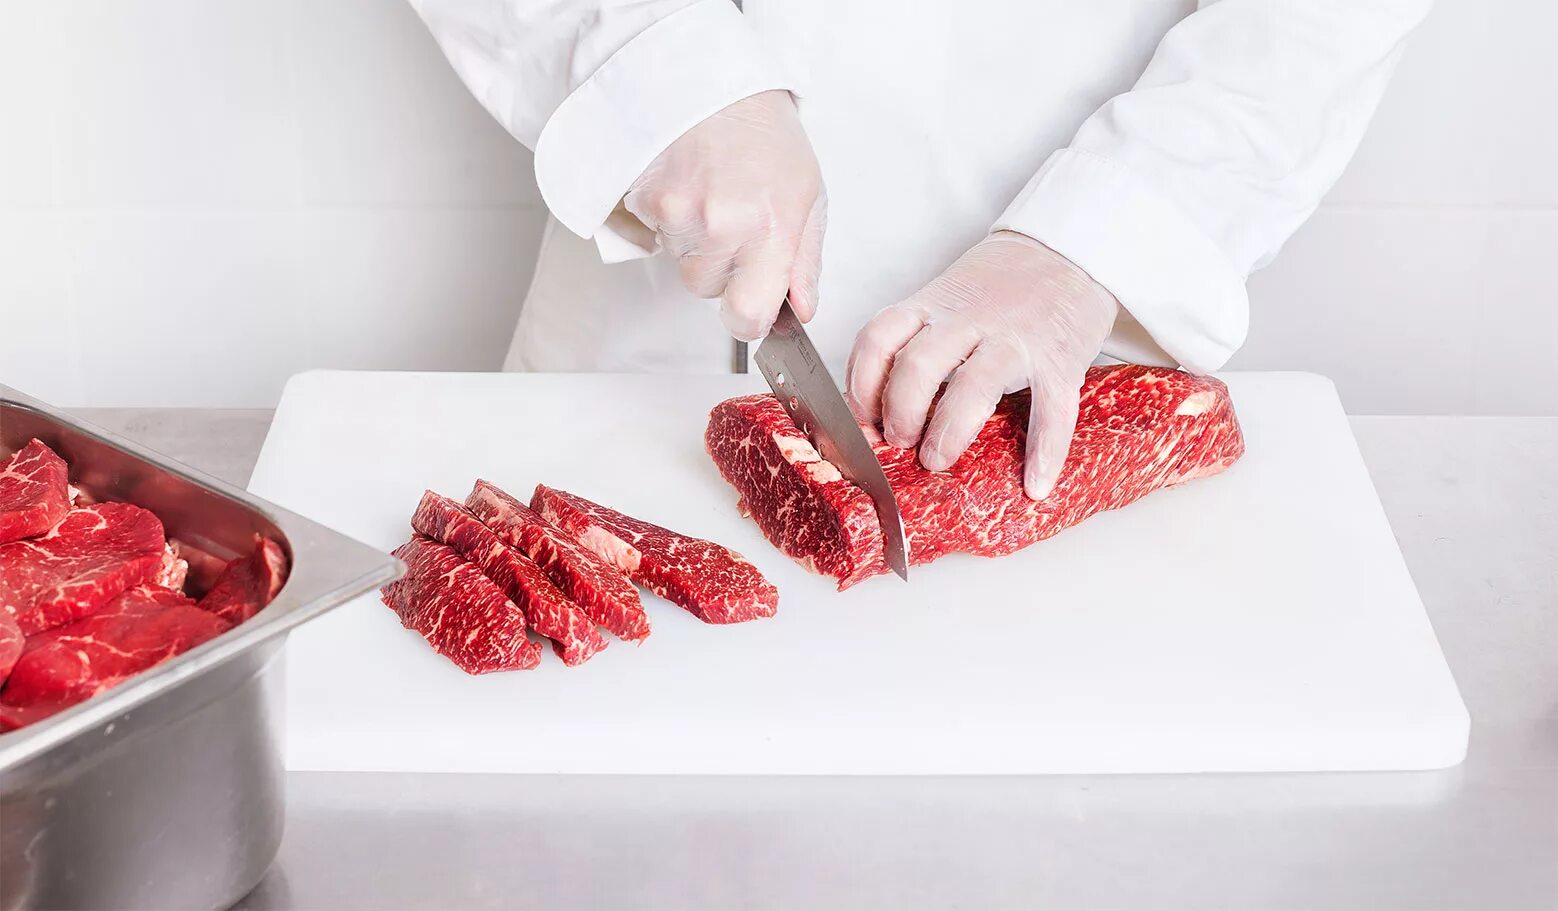 Промышленная нарезка мяса. Meat cutting